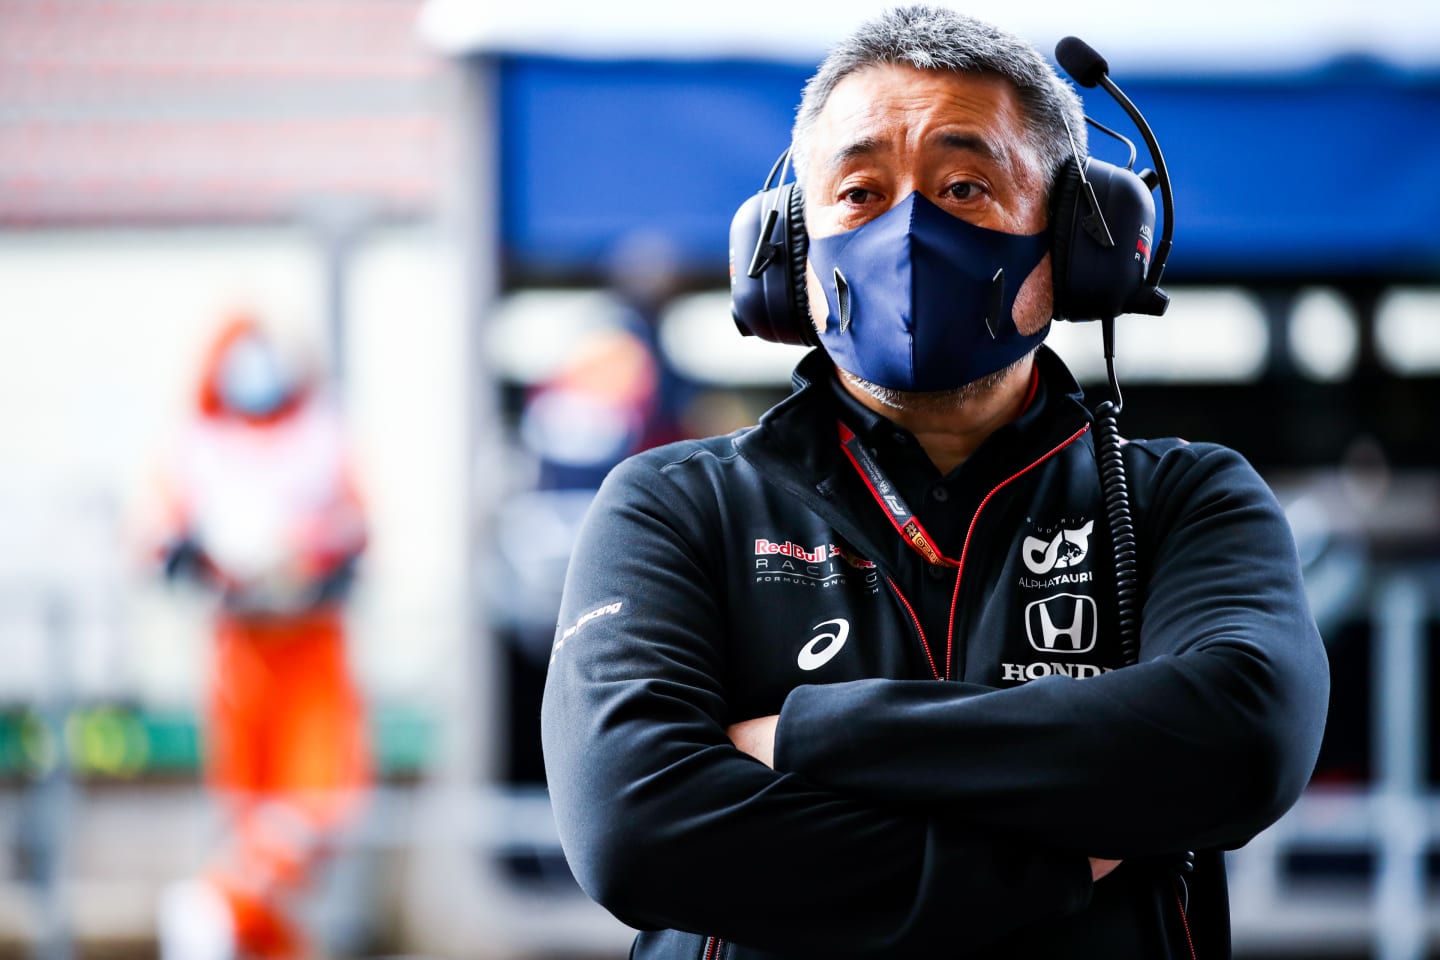 SPA, BELGIUM - AUGUST 29: Masashi Yamamoto of Honda looks on outside the Red Bull Racing garage